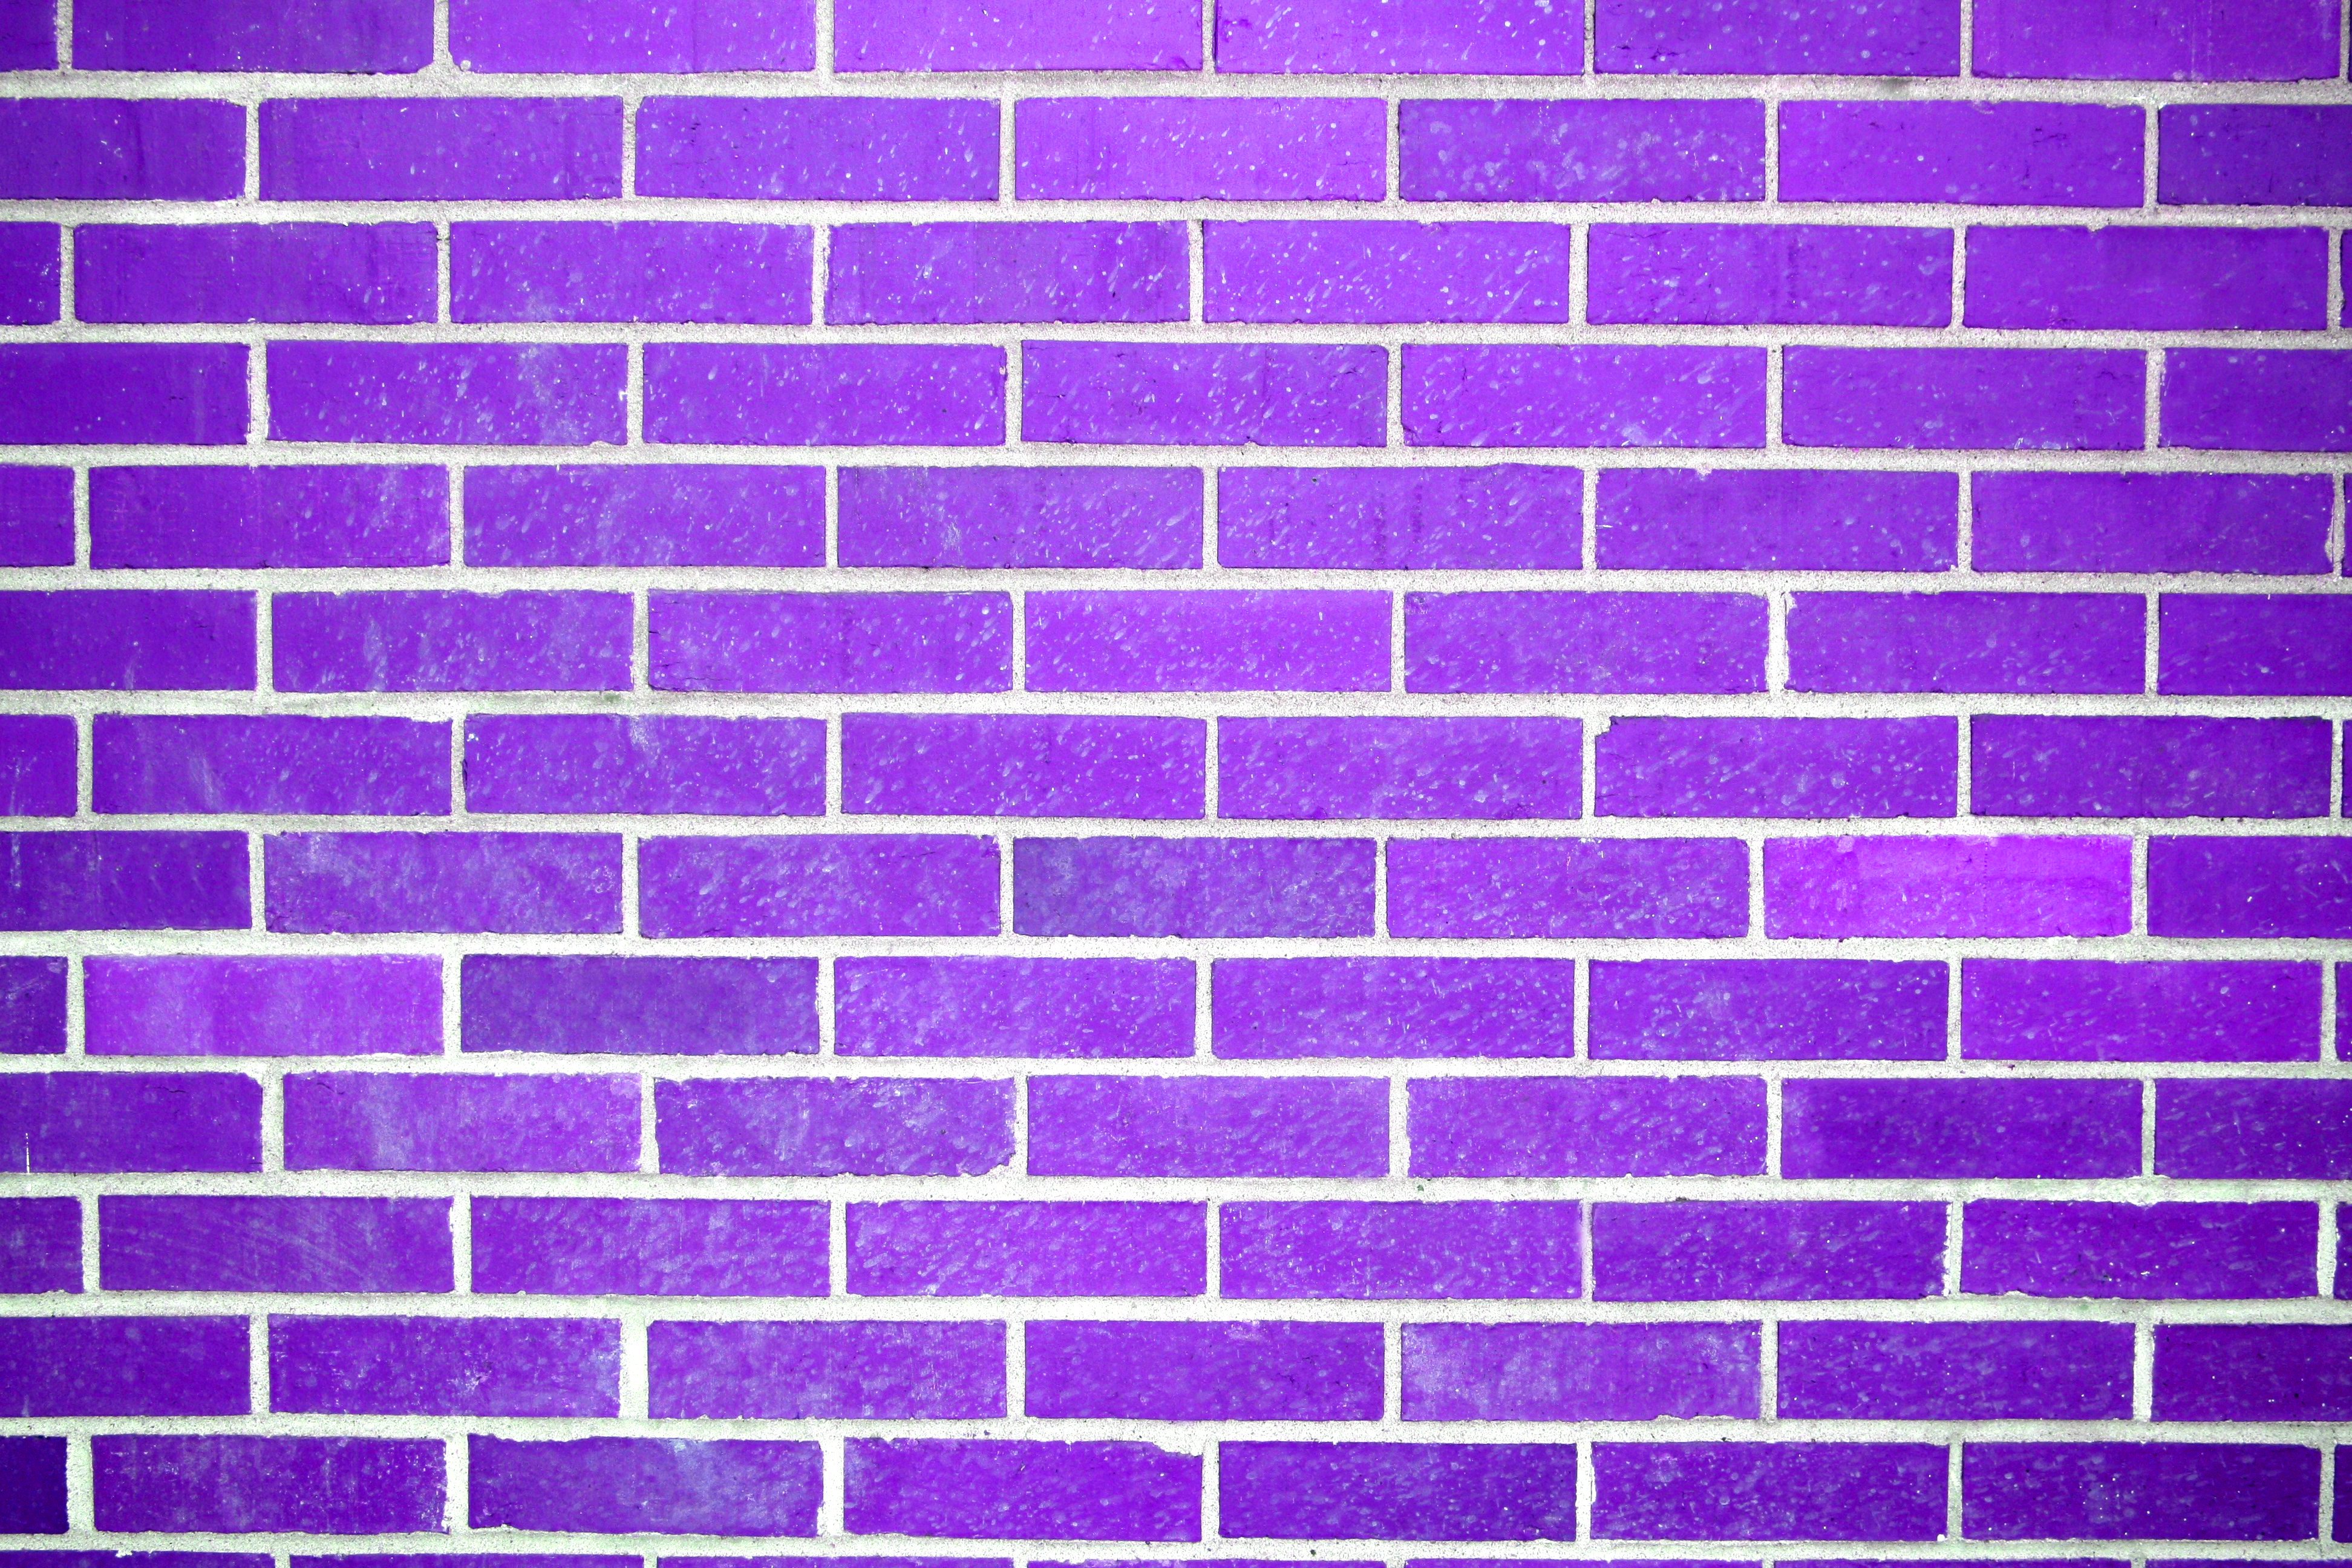 Purple Brick Wall Texture Picture | Free Photograph | Photos Public ...